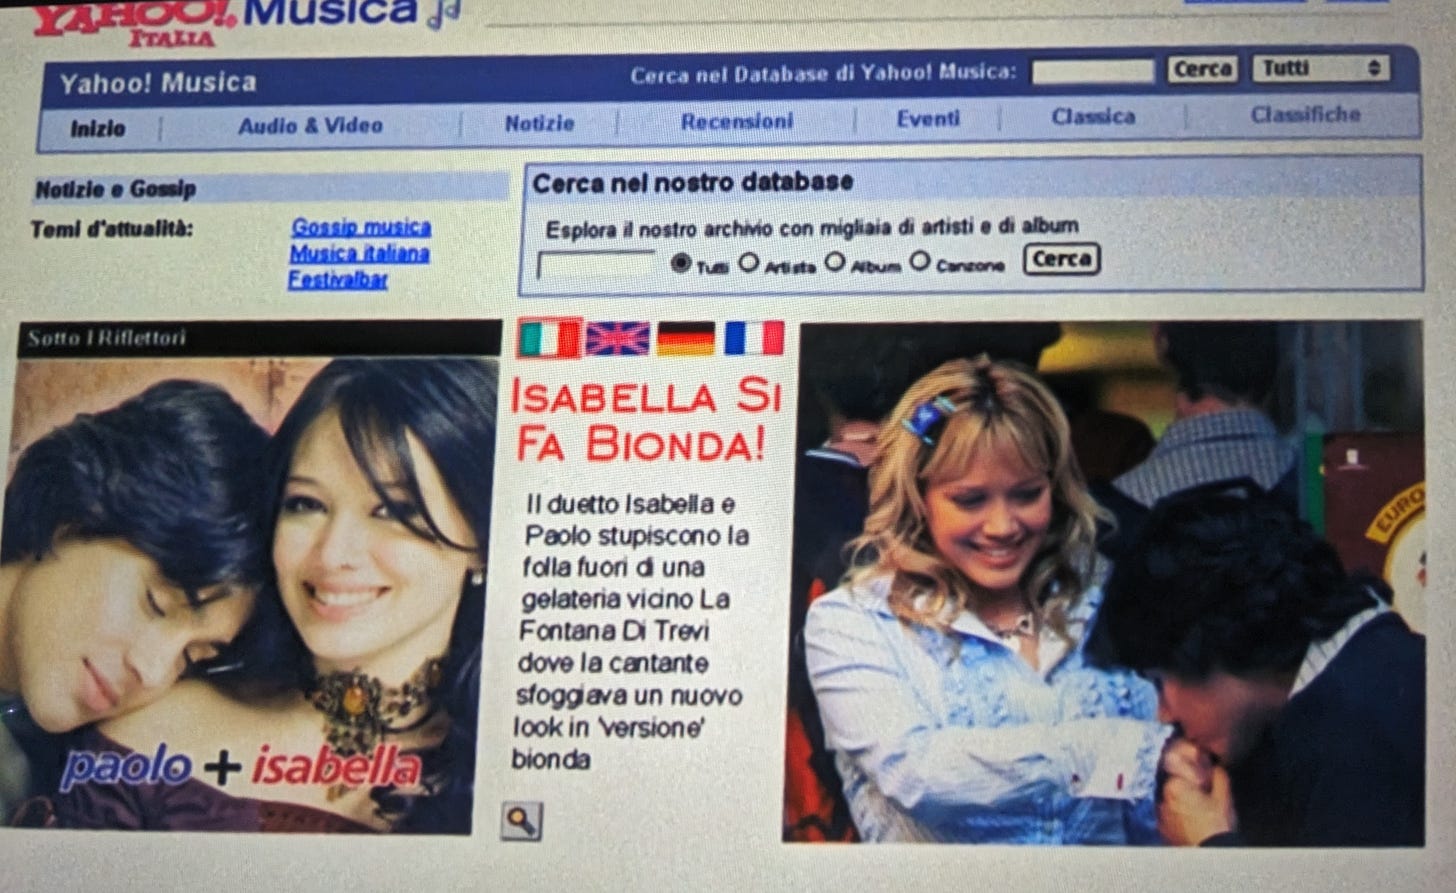 The Italian Yahoo! Music site.